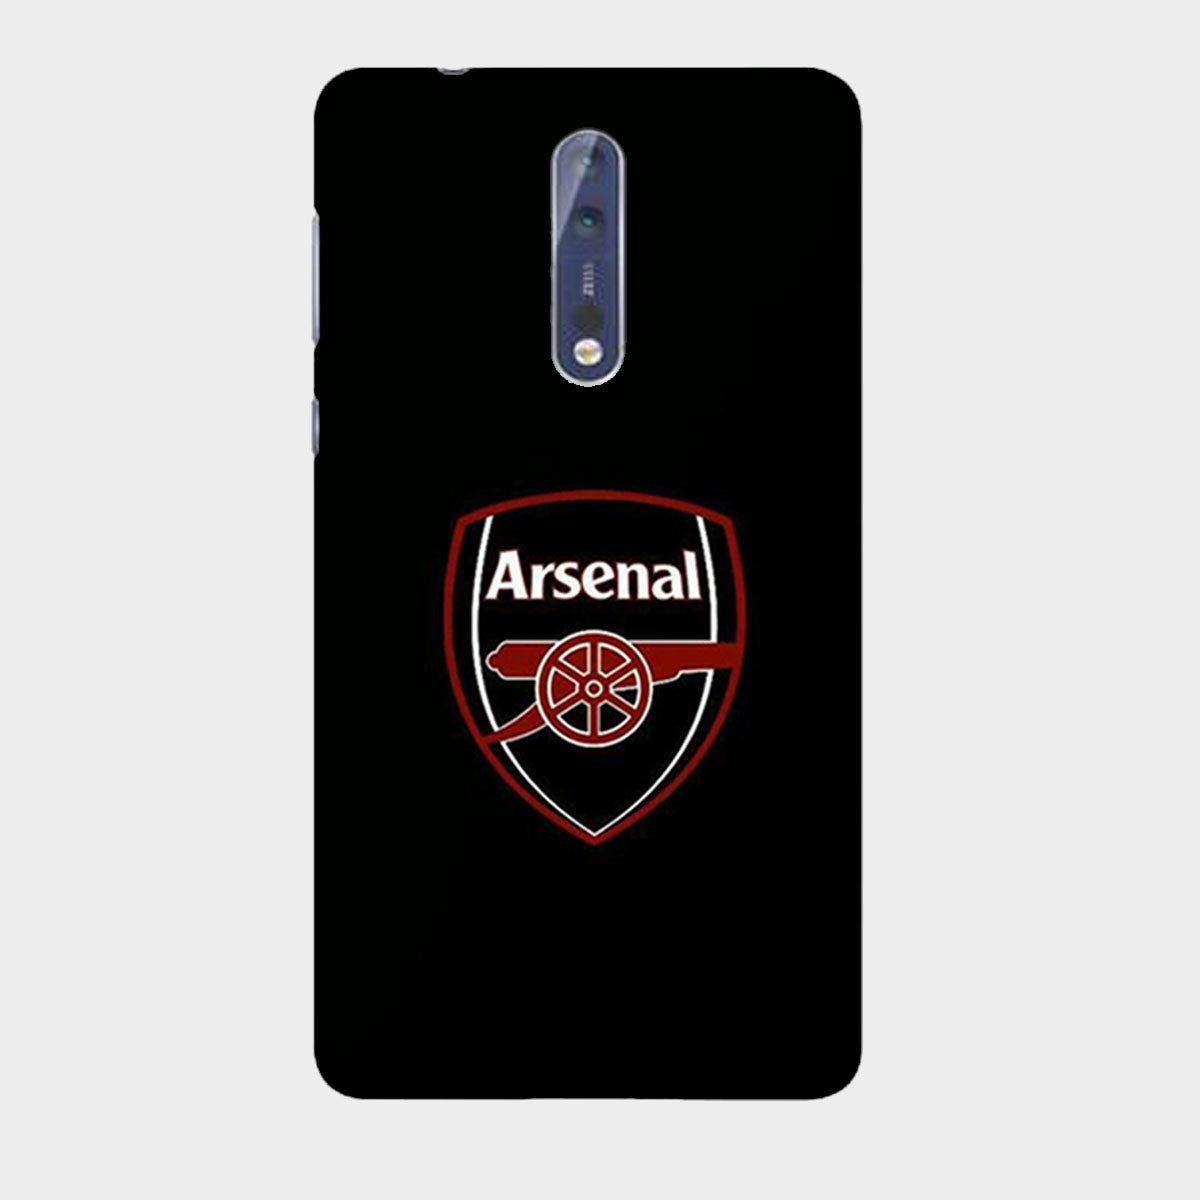 Arsenal - Black - Mobile Phone Cover - Hard Case